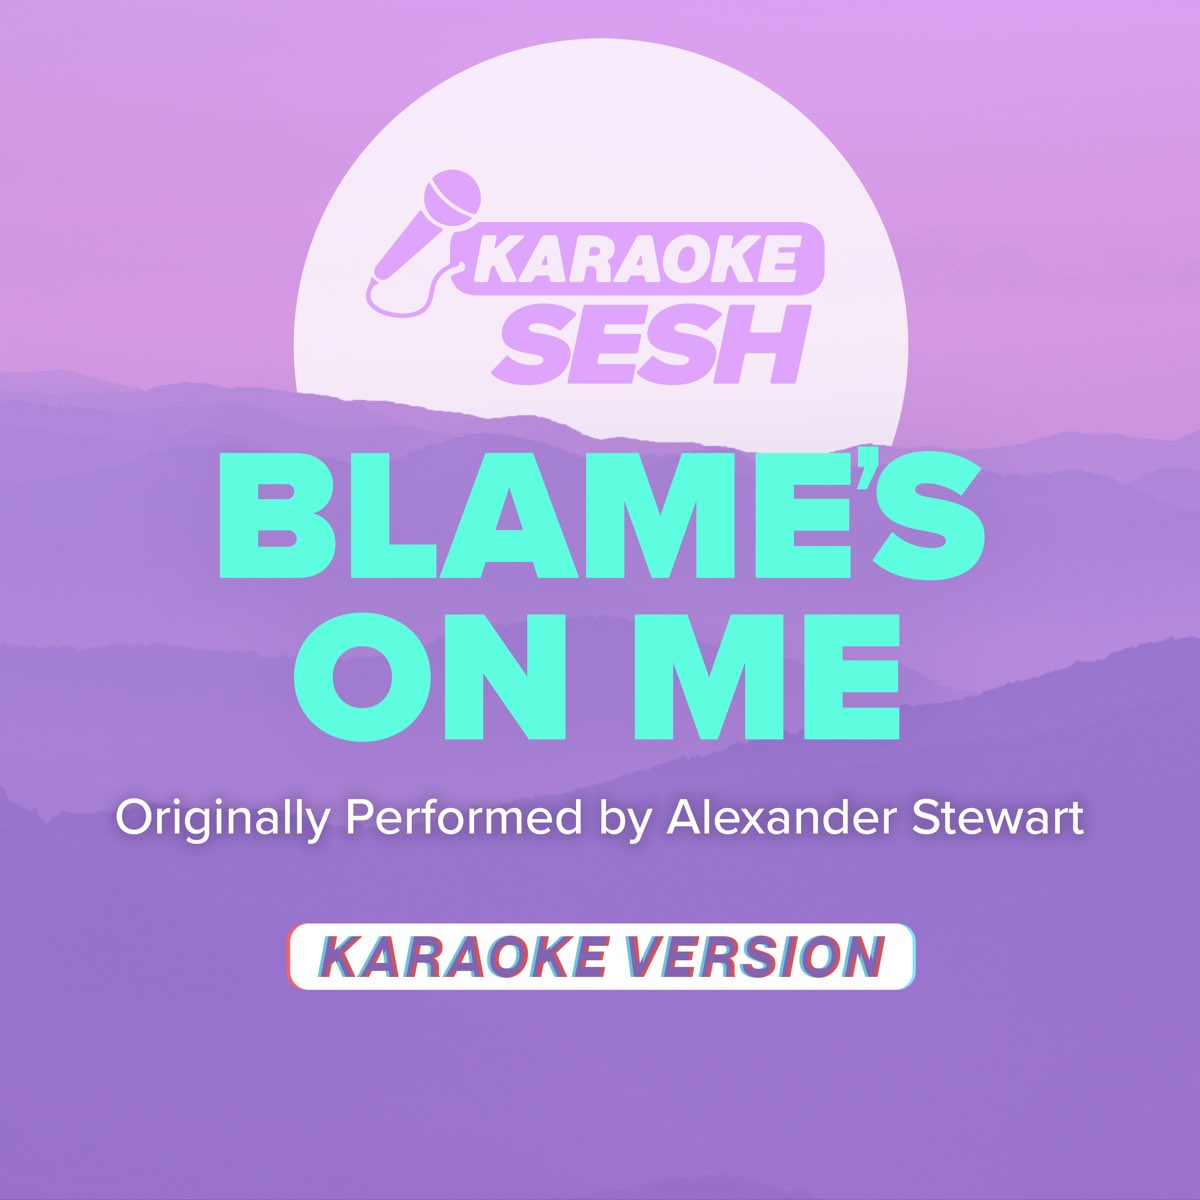 Alexander Stewart - blame's on me (Lyrics) 